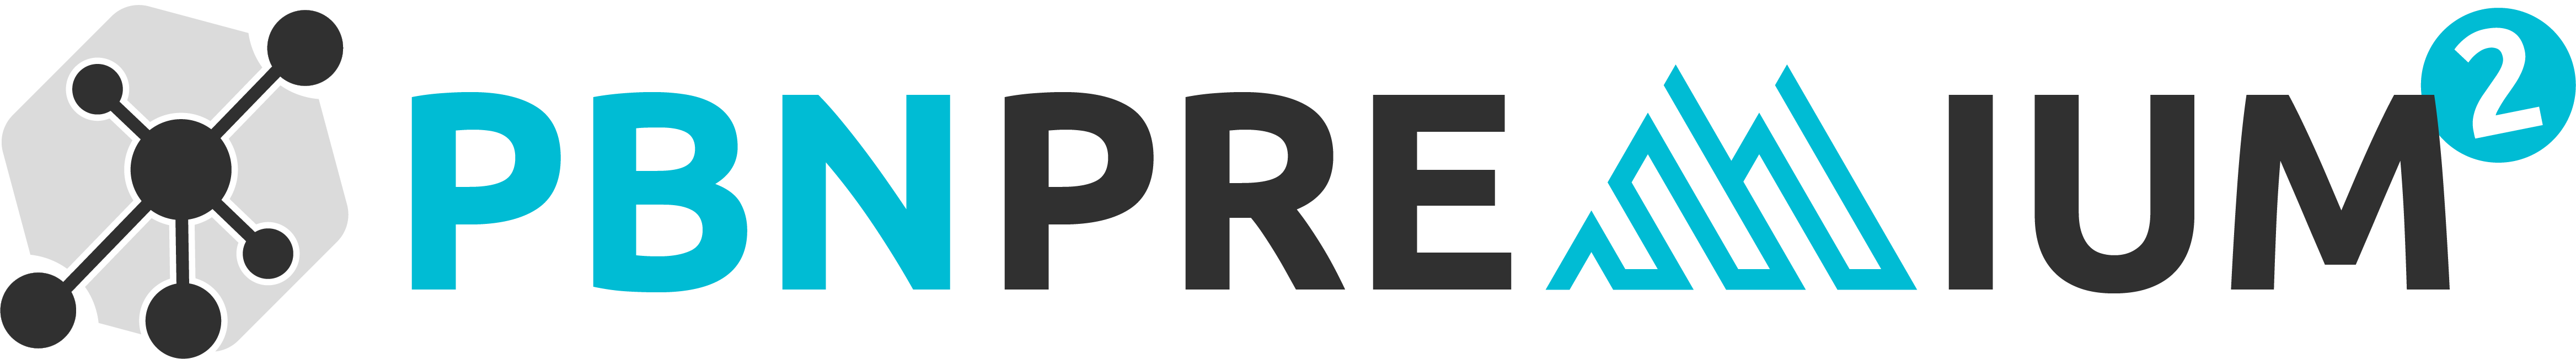 PBN Premium vente de nom de domaine 